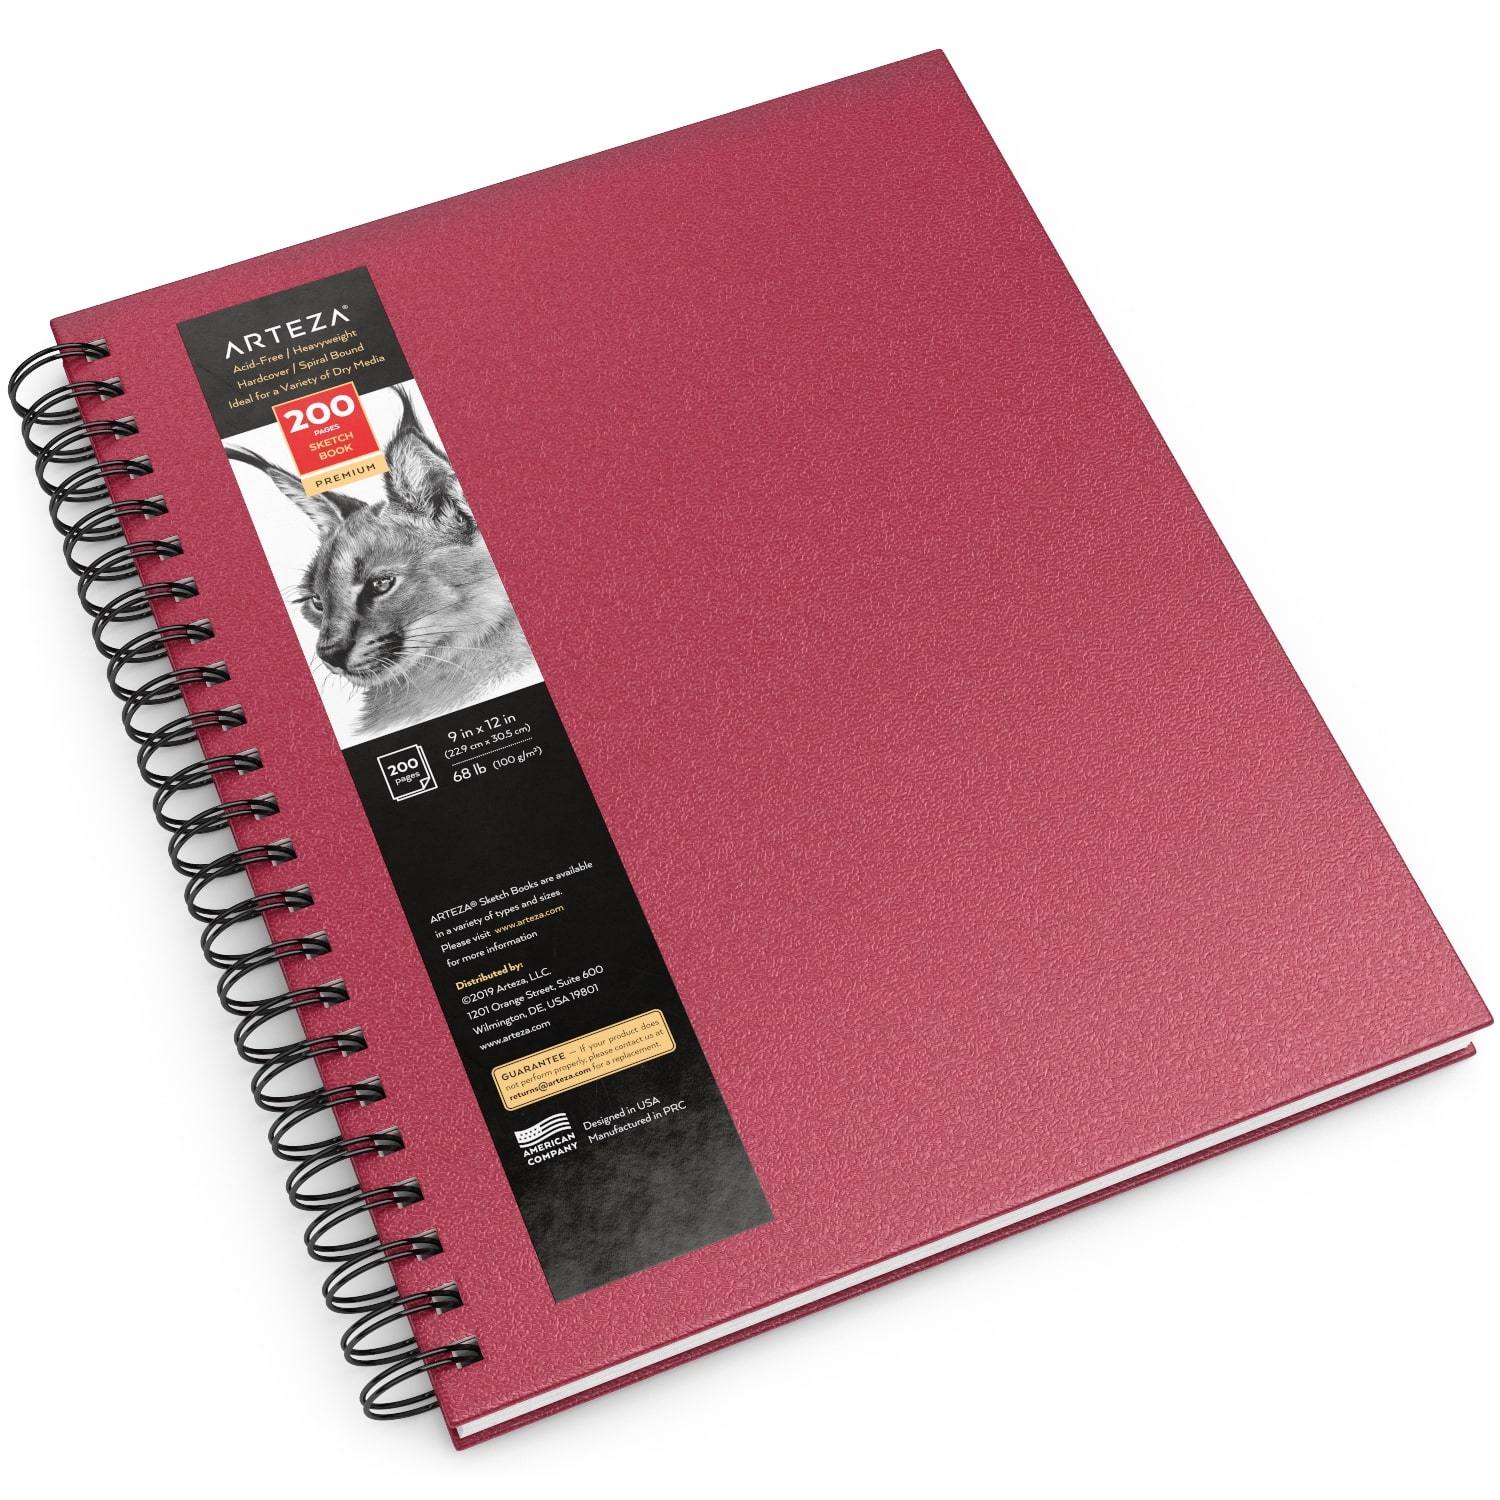 Sketchbook: 600 Pages of Sketchbook Paper - Creative Composition Notebook -  Pink Paperback Cover - Drawing Sketch Book for Artists